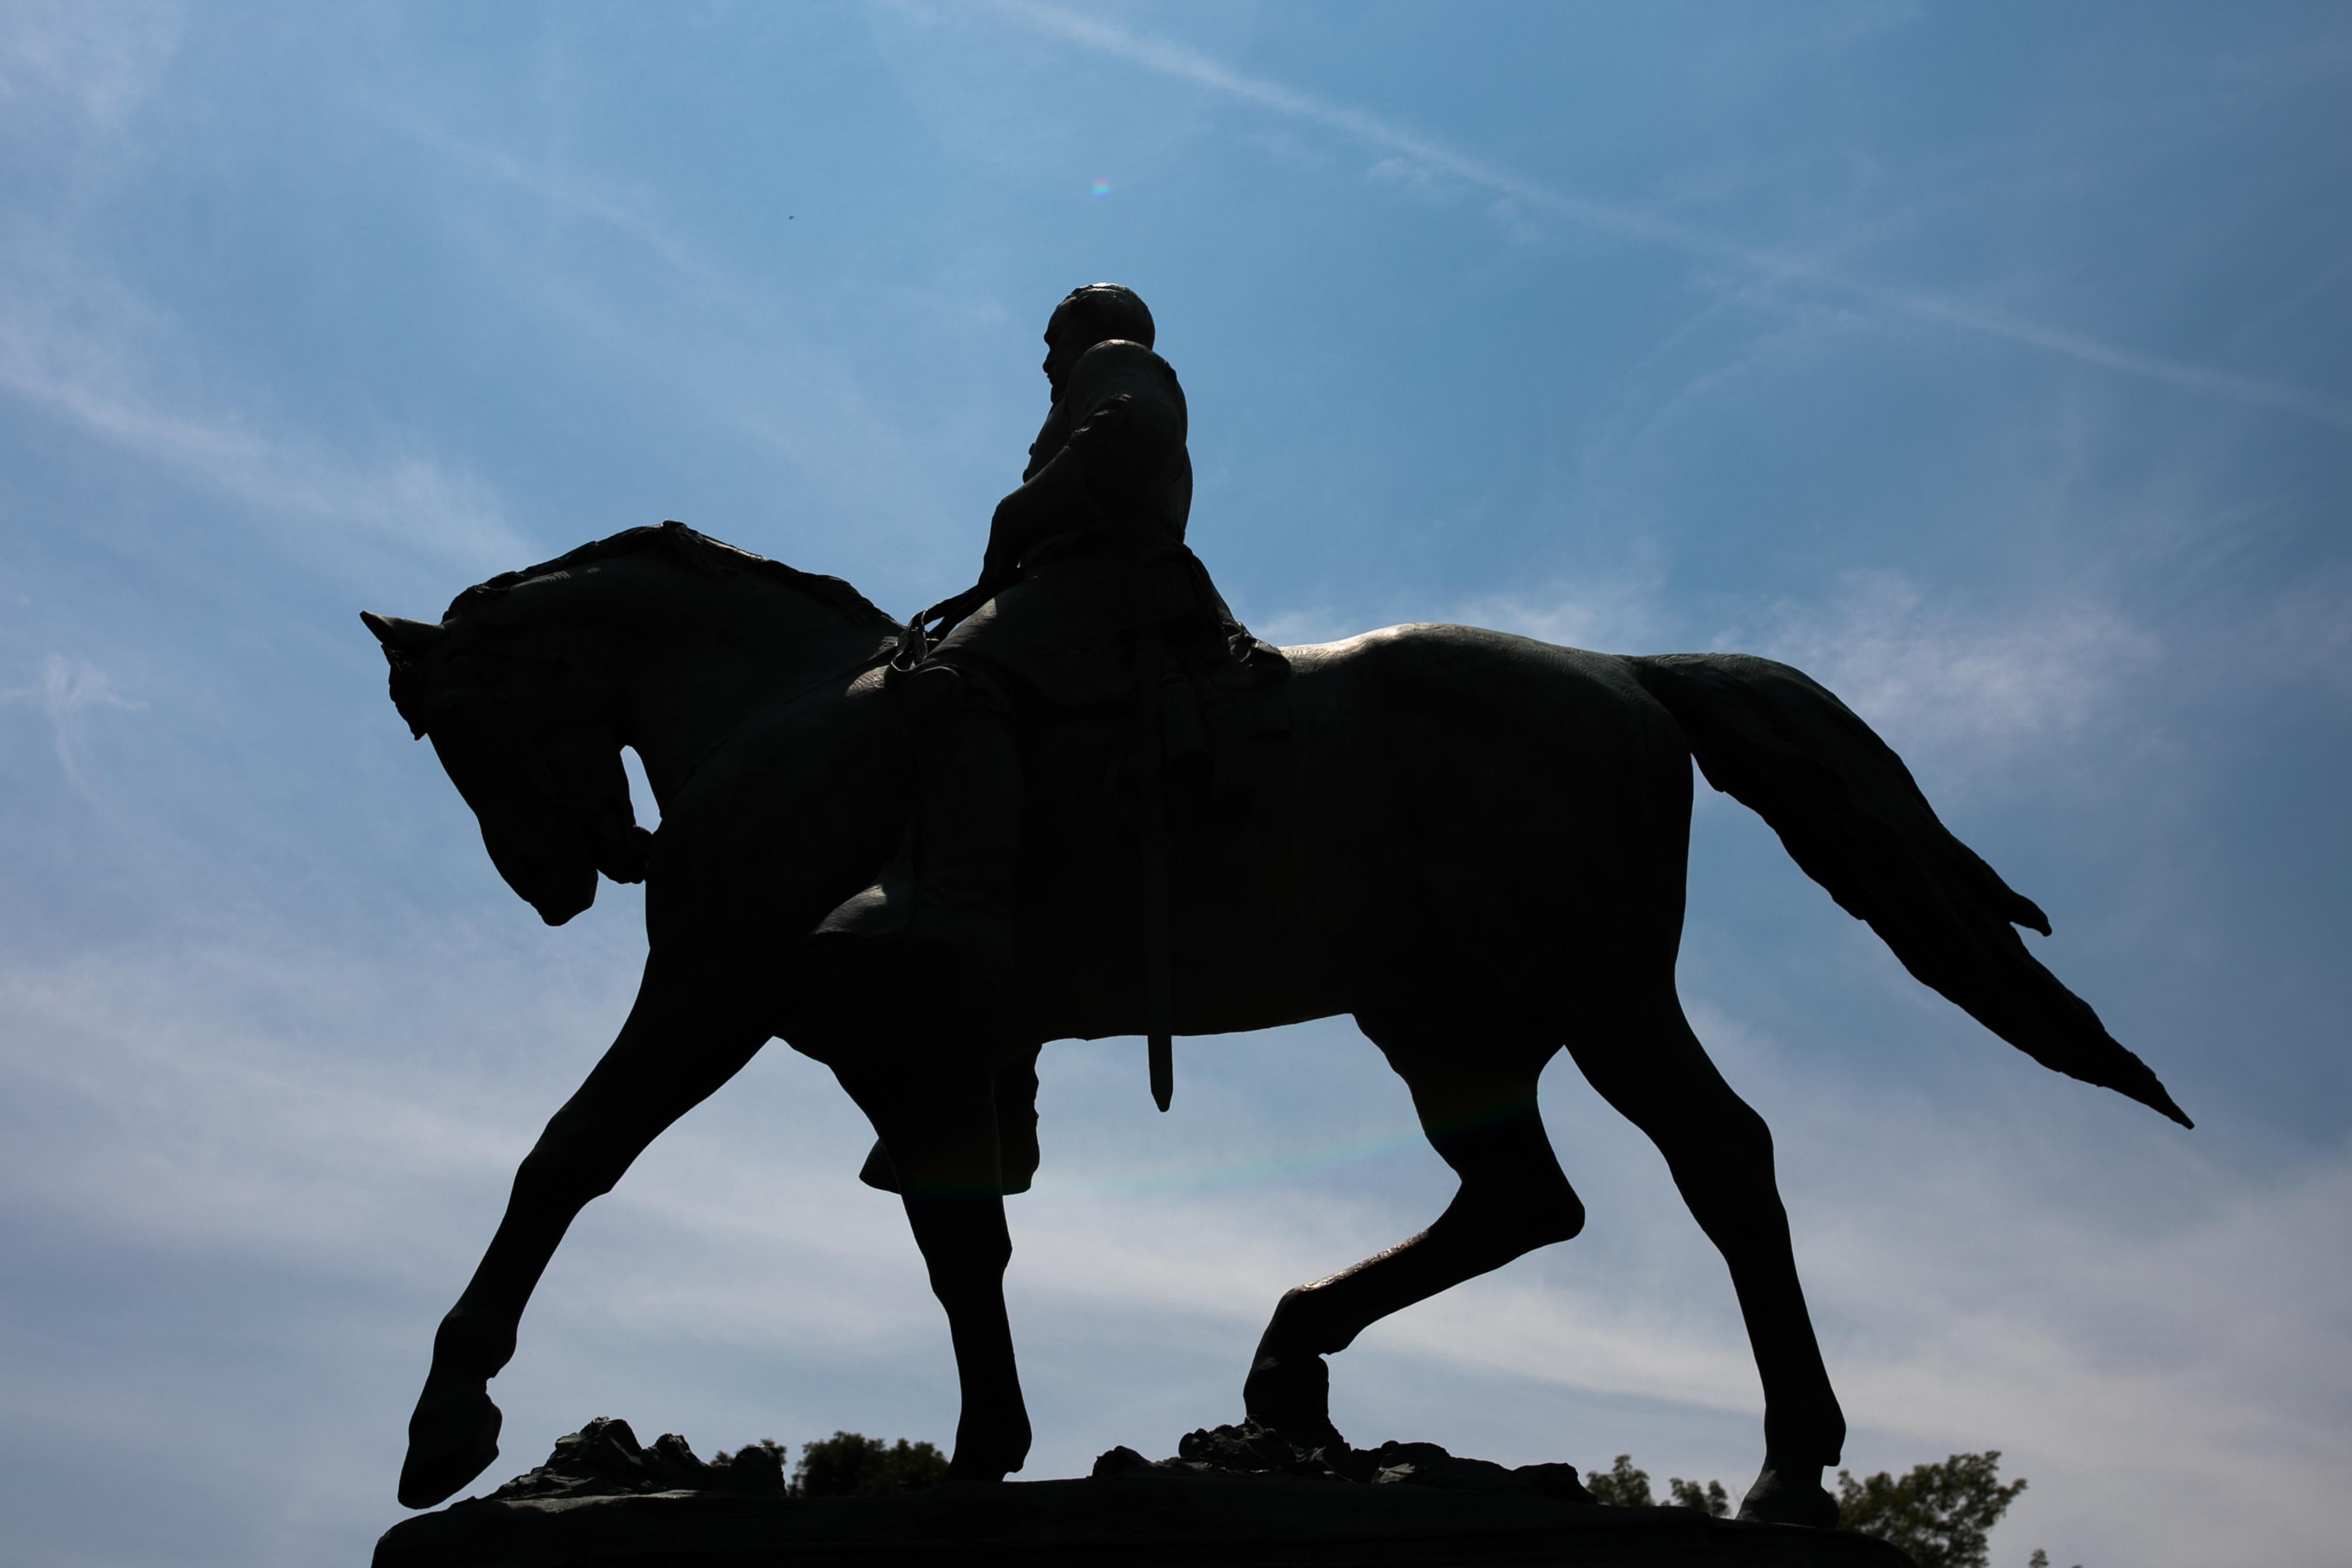 A statue of Confederate General Robert E. Lee on horseback.